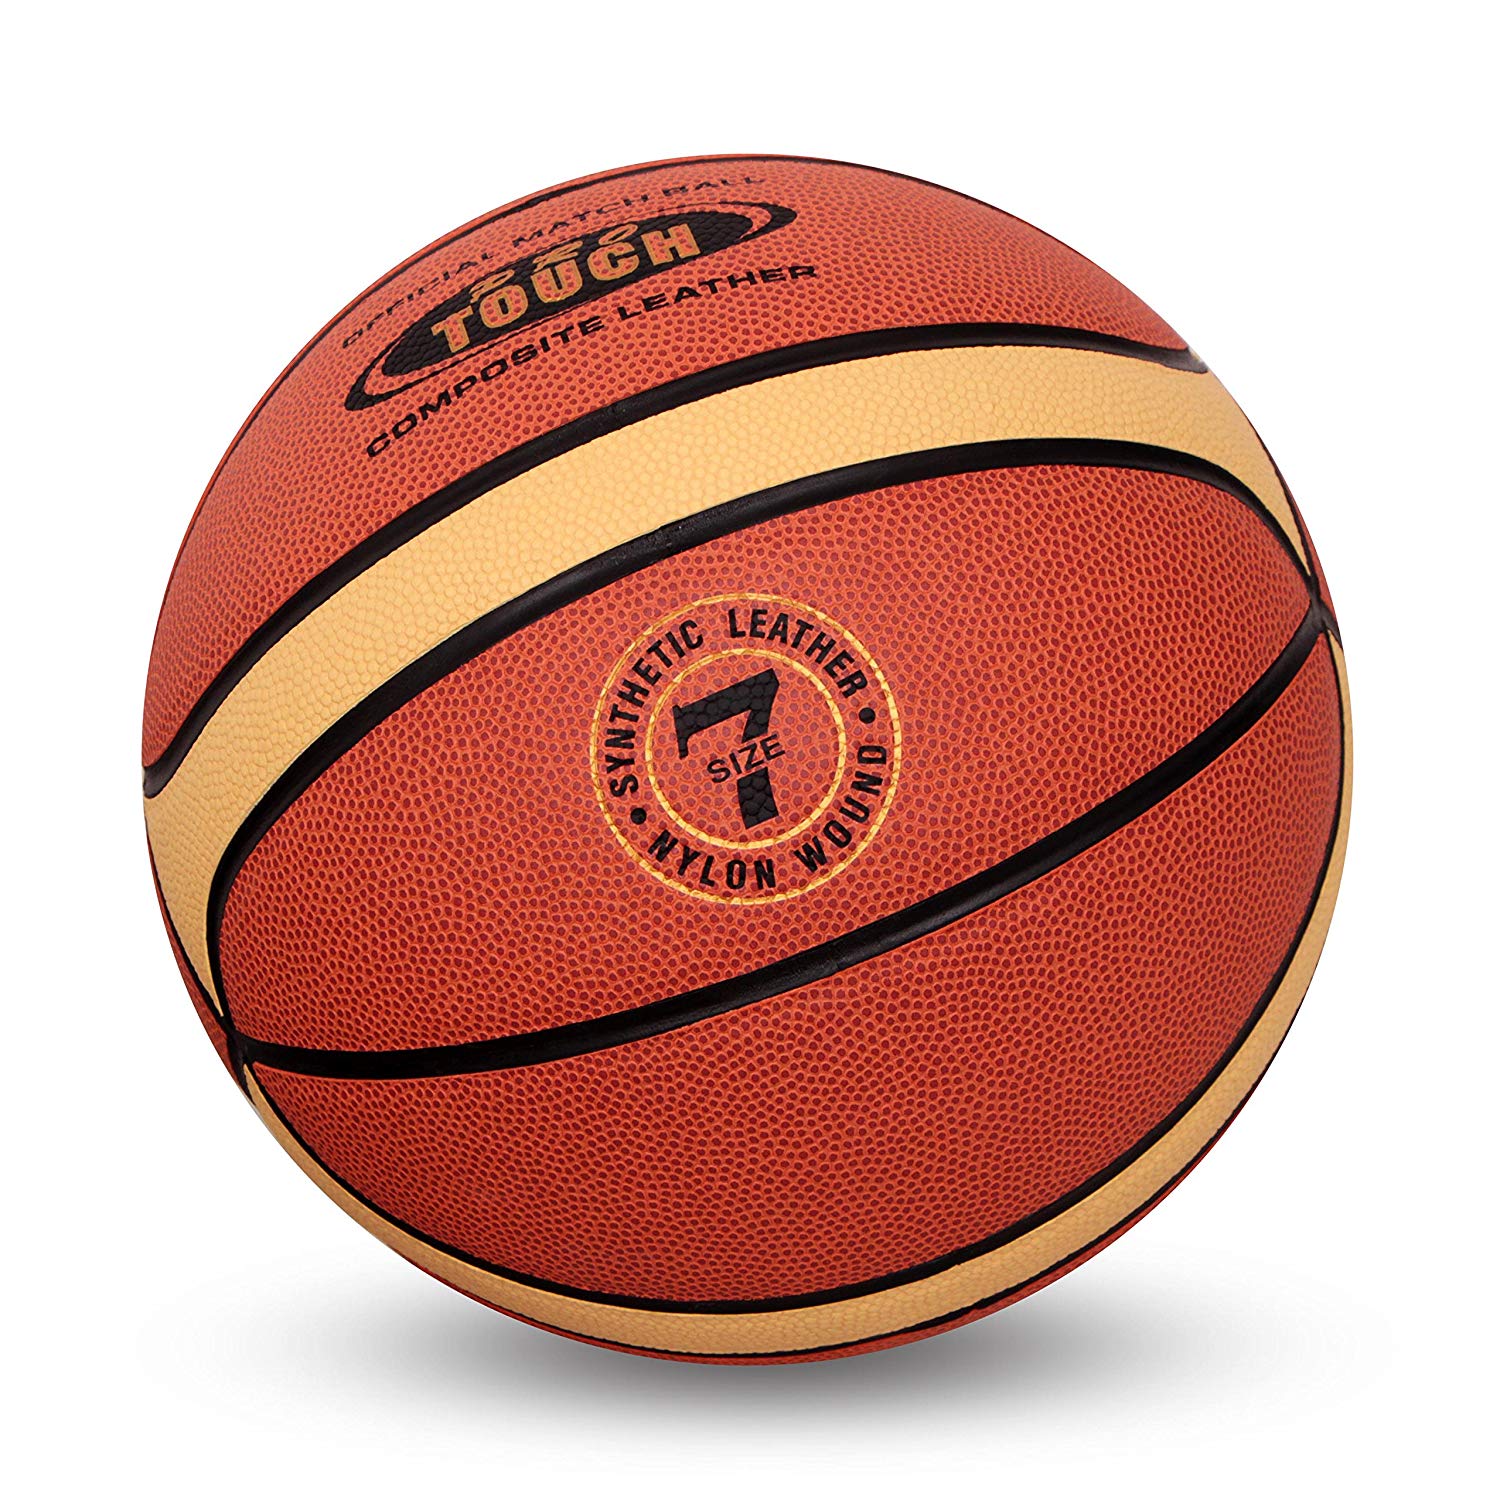 Nivia Pro Touch Leather Basketball, Size 7 (Orange) - Best Price online Prokicksports.com